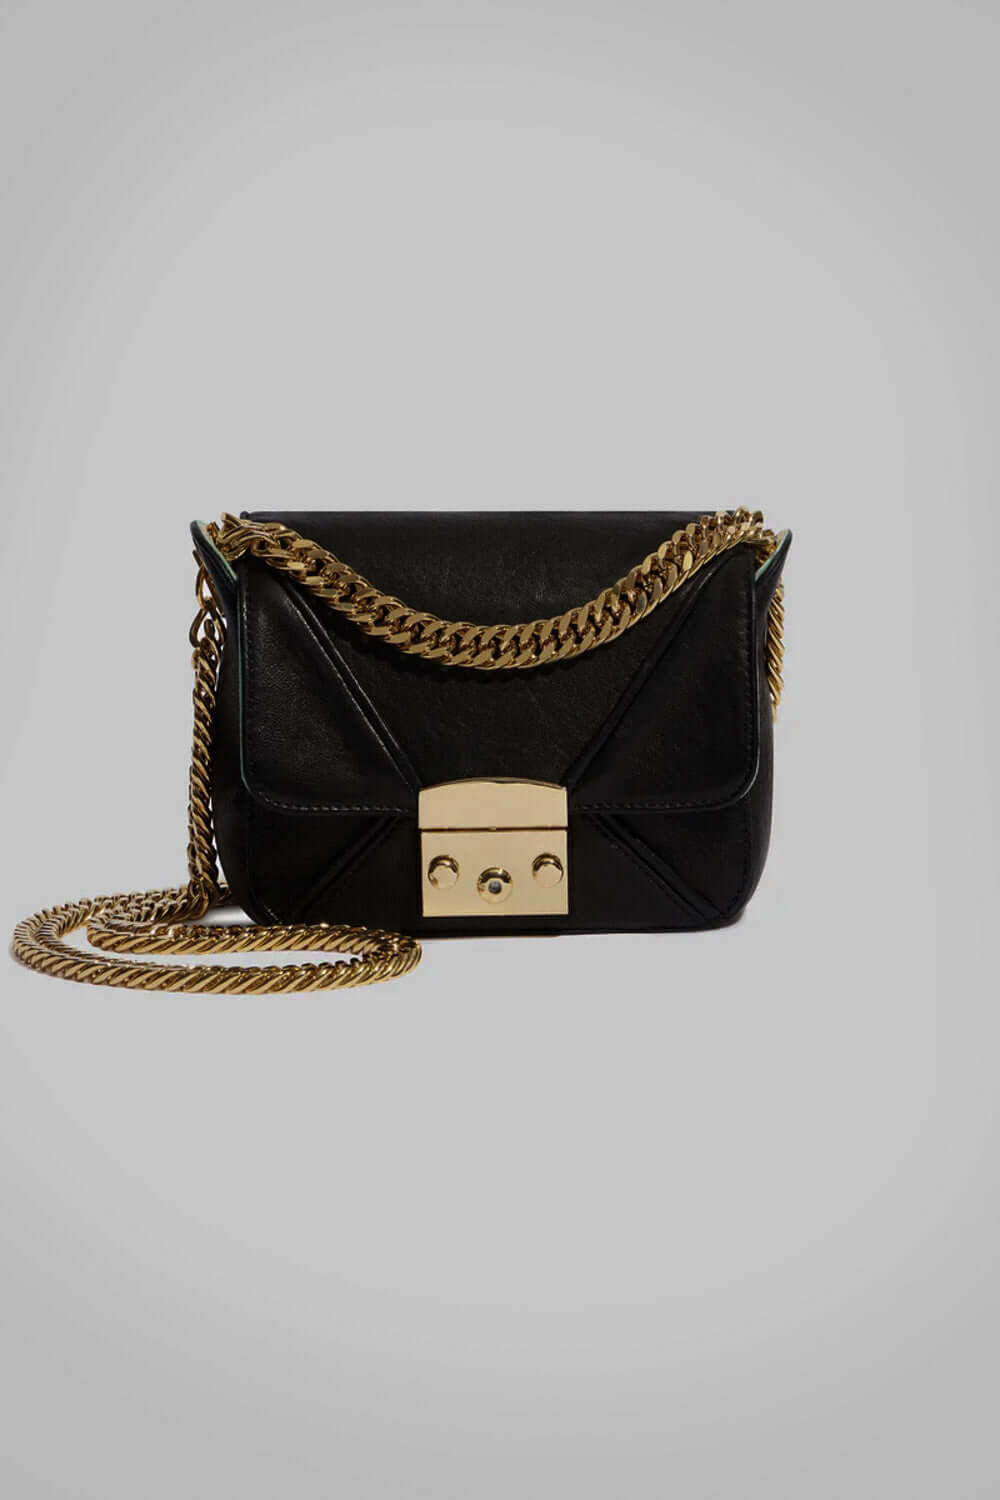 Vivian handbag in black leather